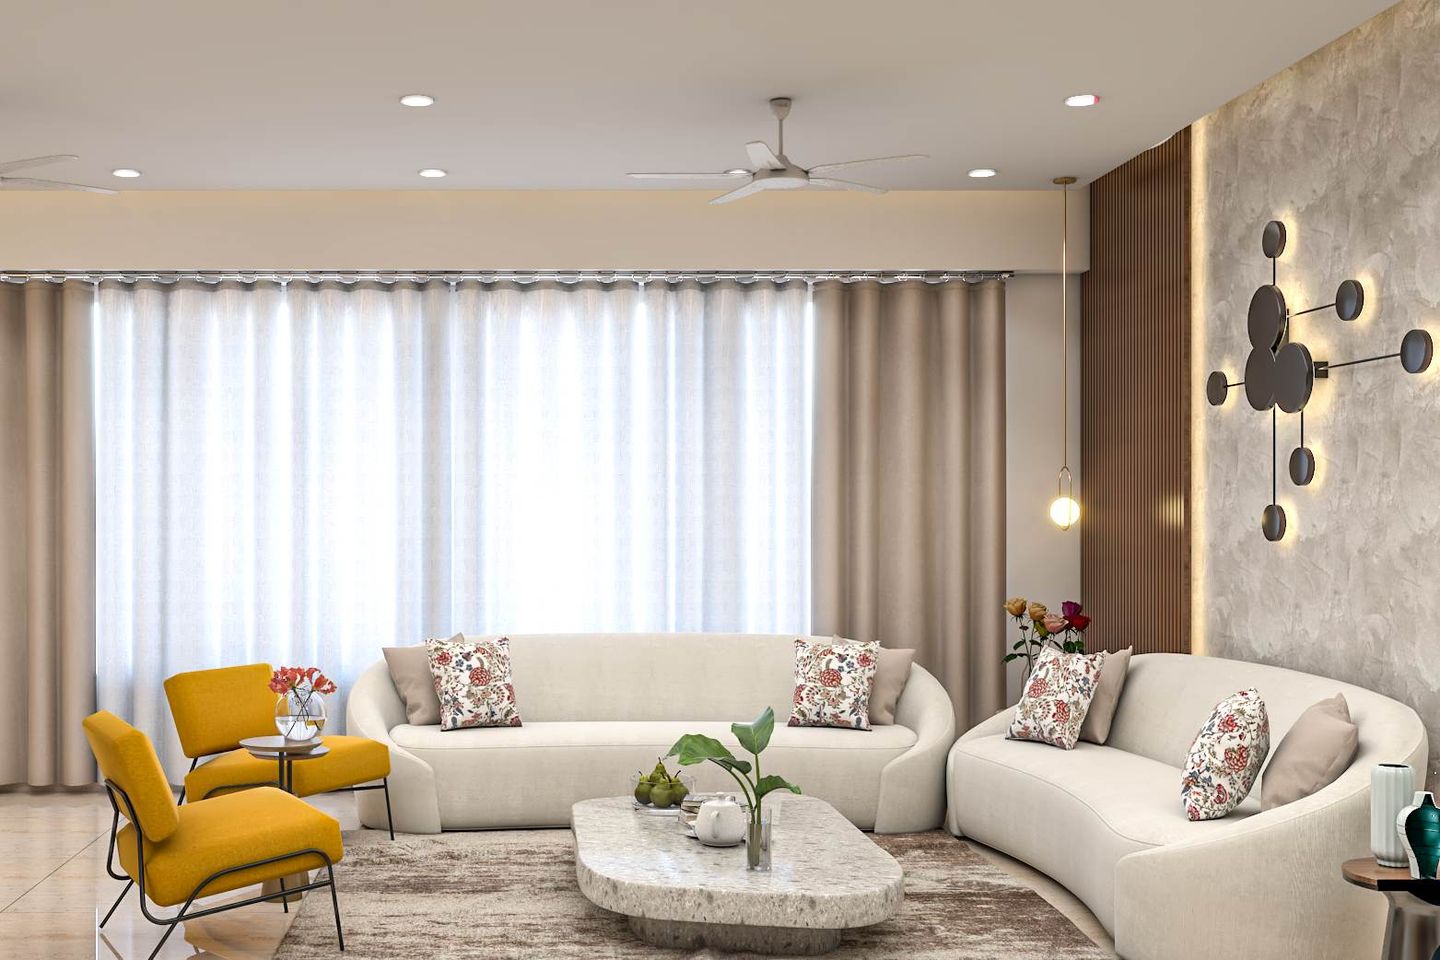 Contemporary Living Room Design With A 6-Seater Sofa